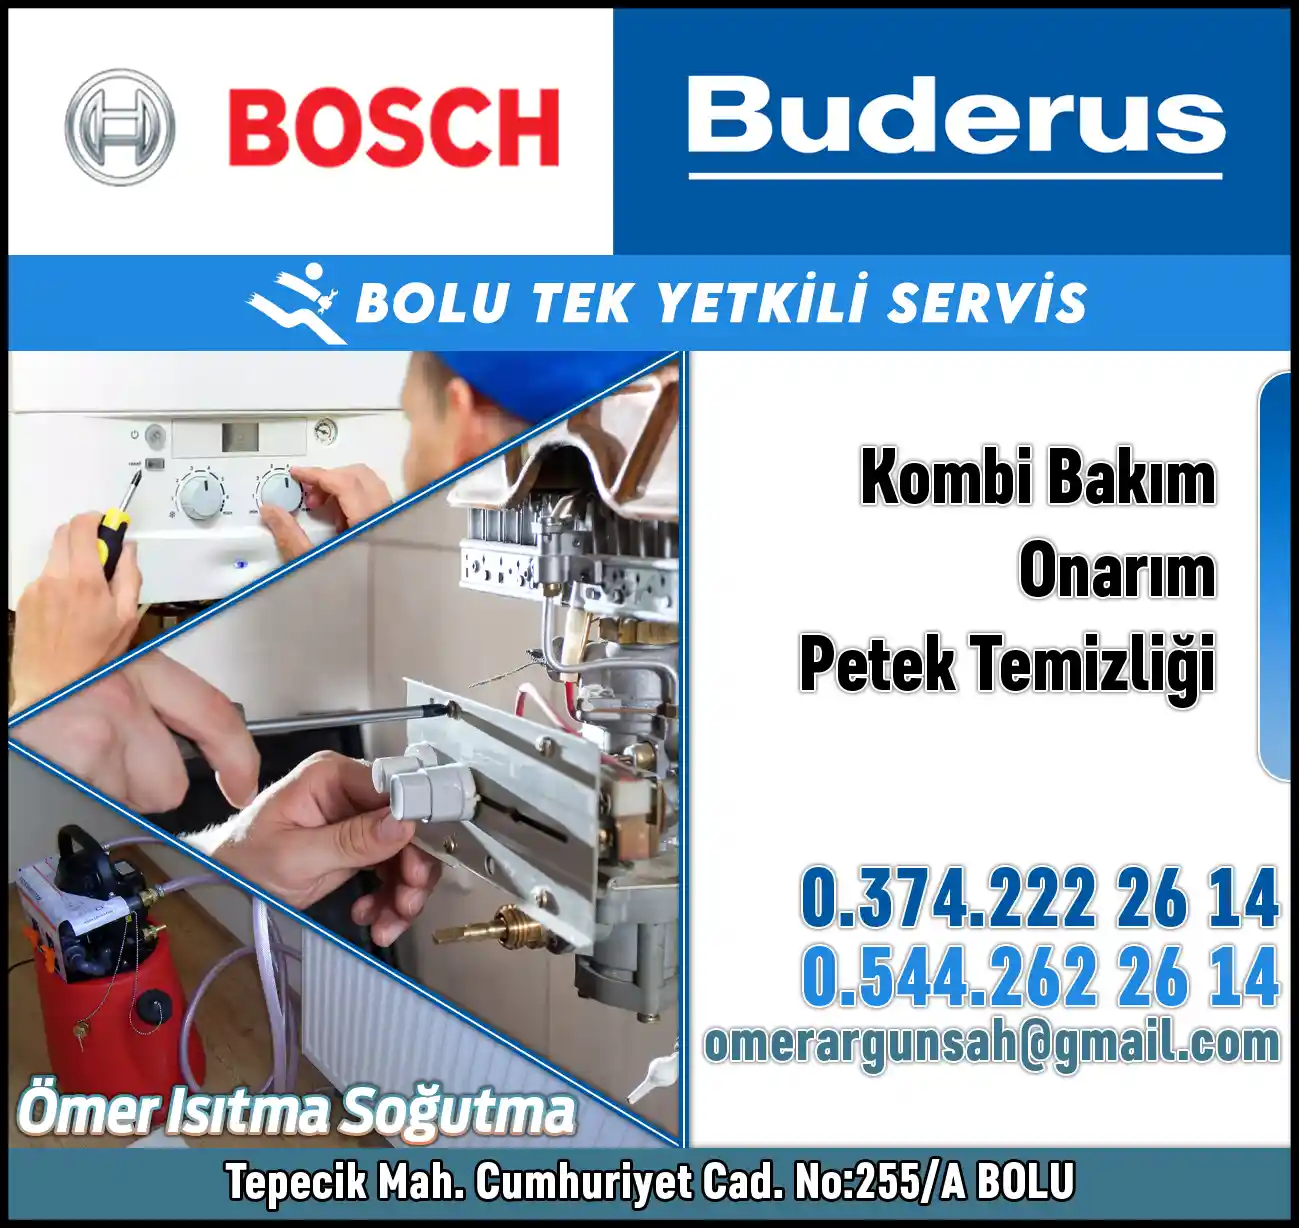 Bosch Buderus Yetkili Servis Bolu